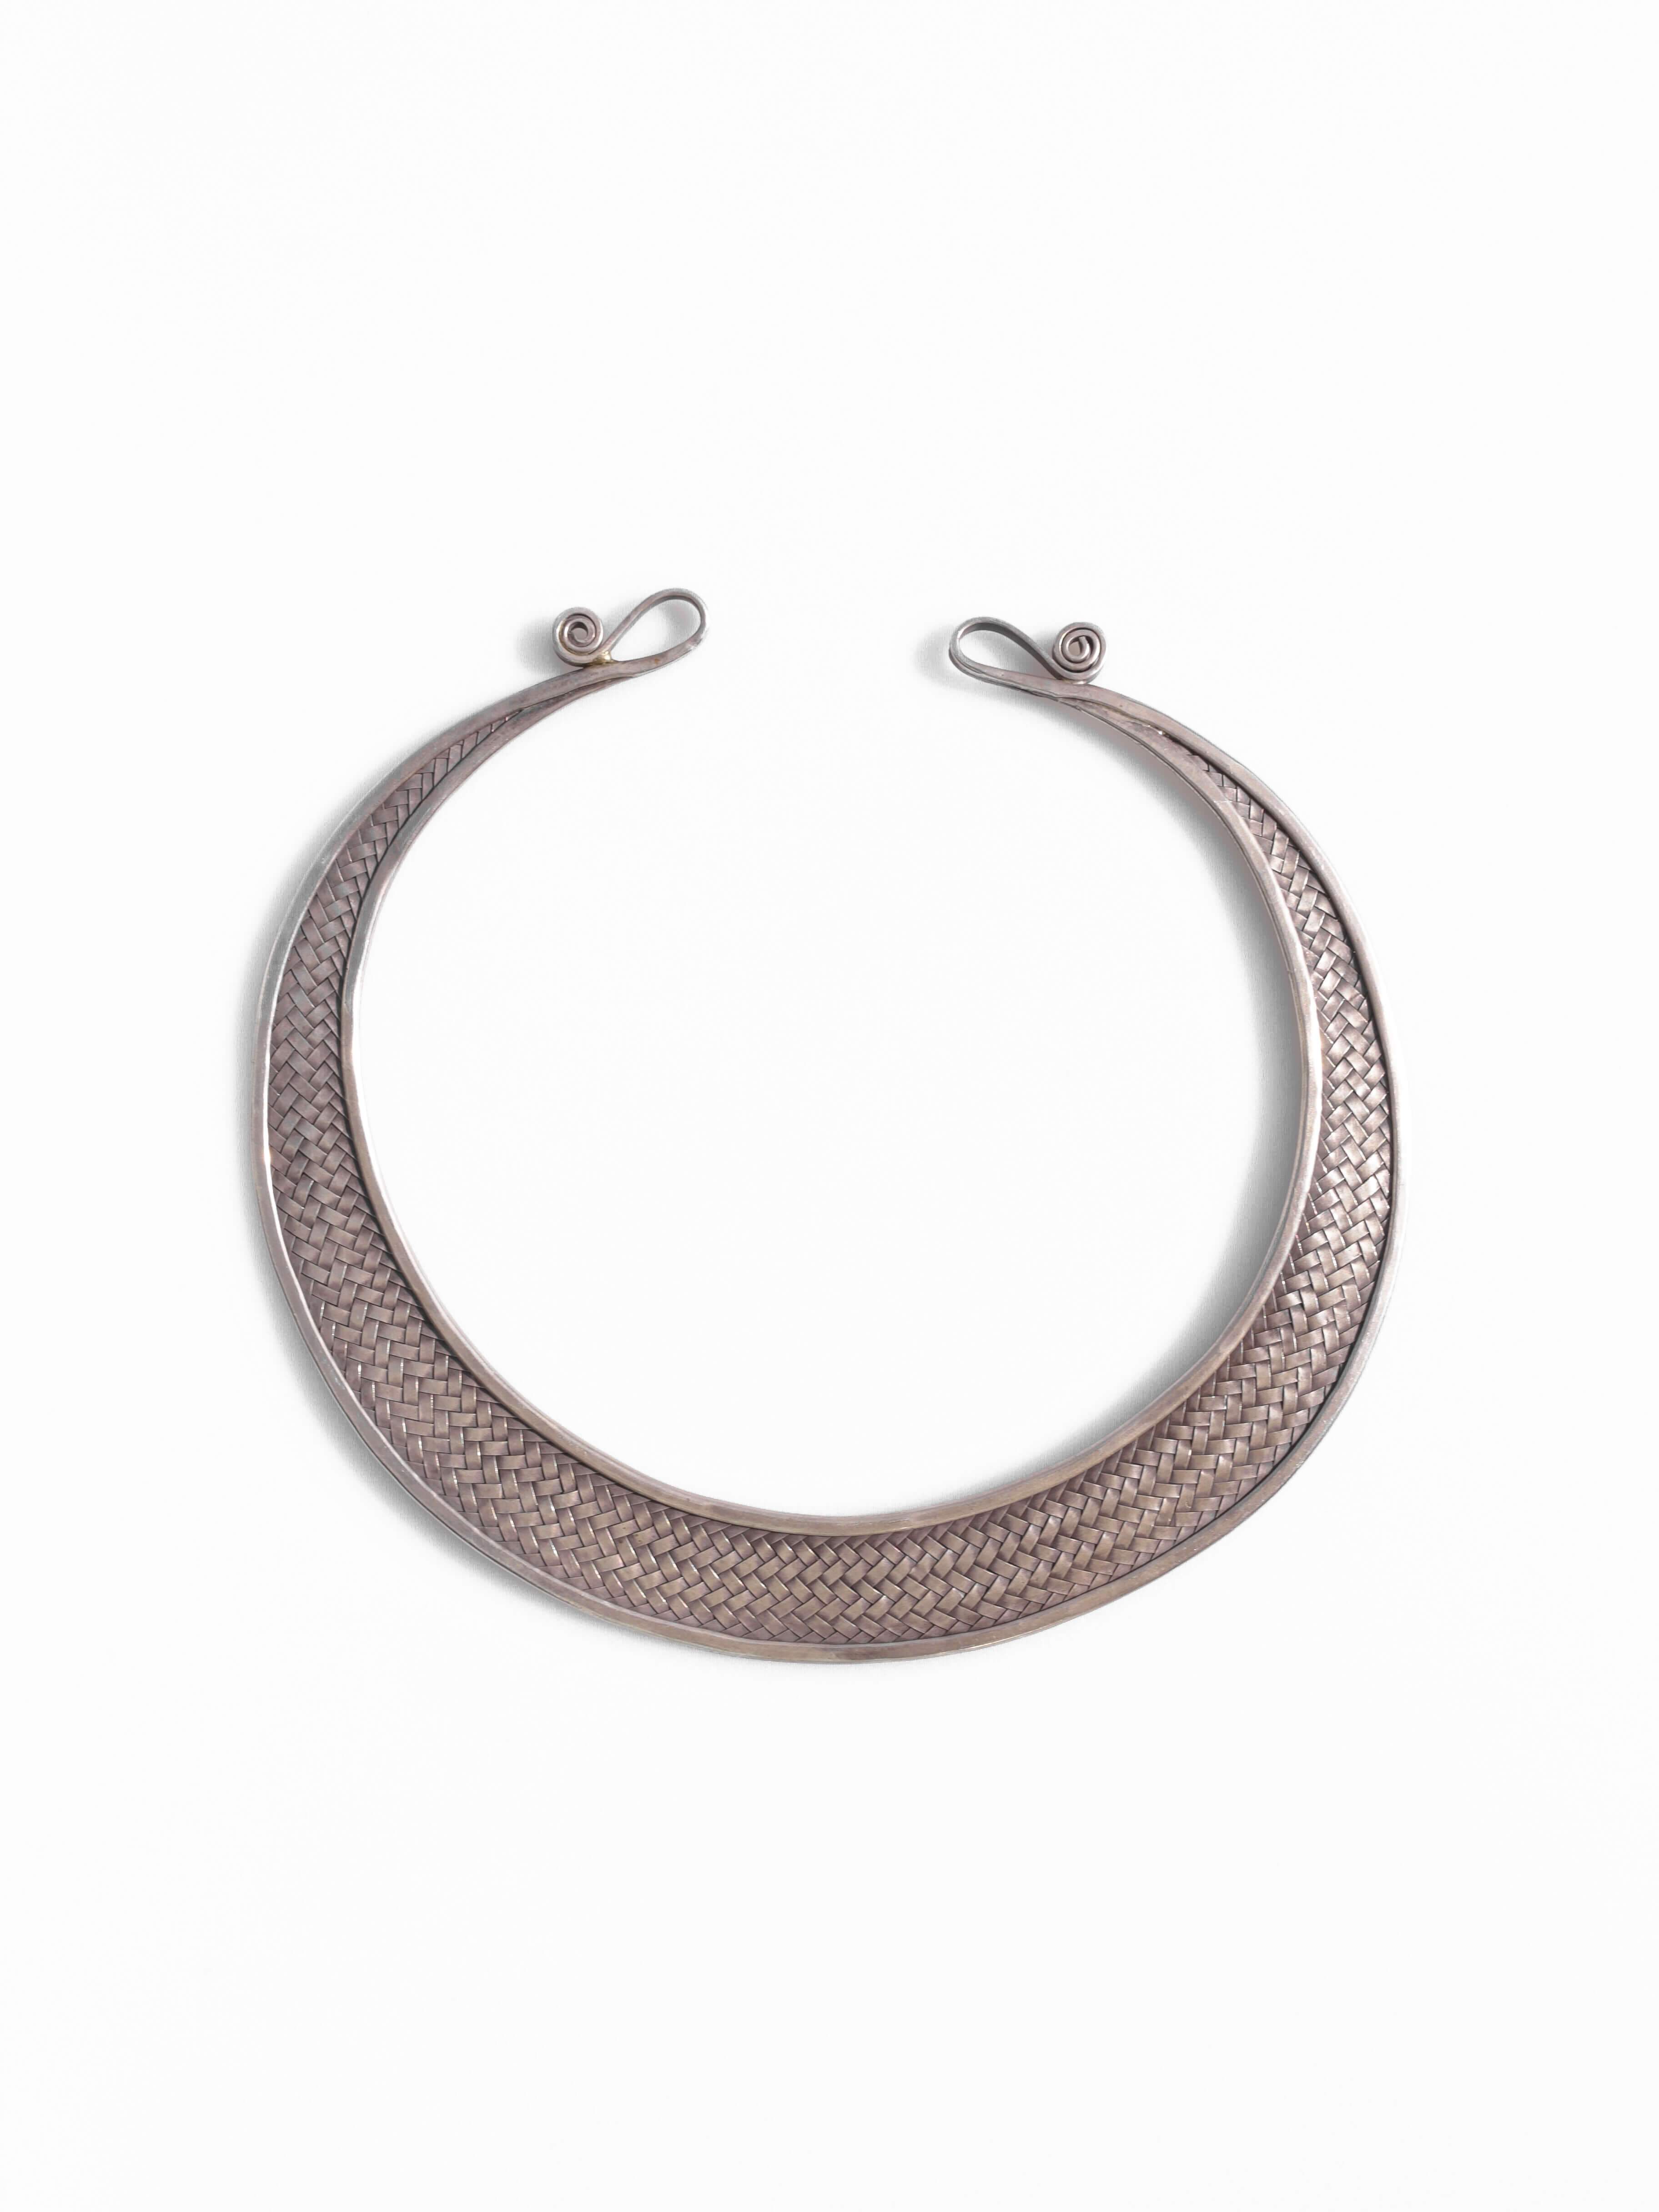 Future Nomads Necklaces Basket Weave Silver Choker